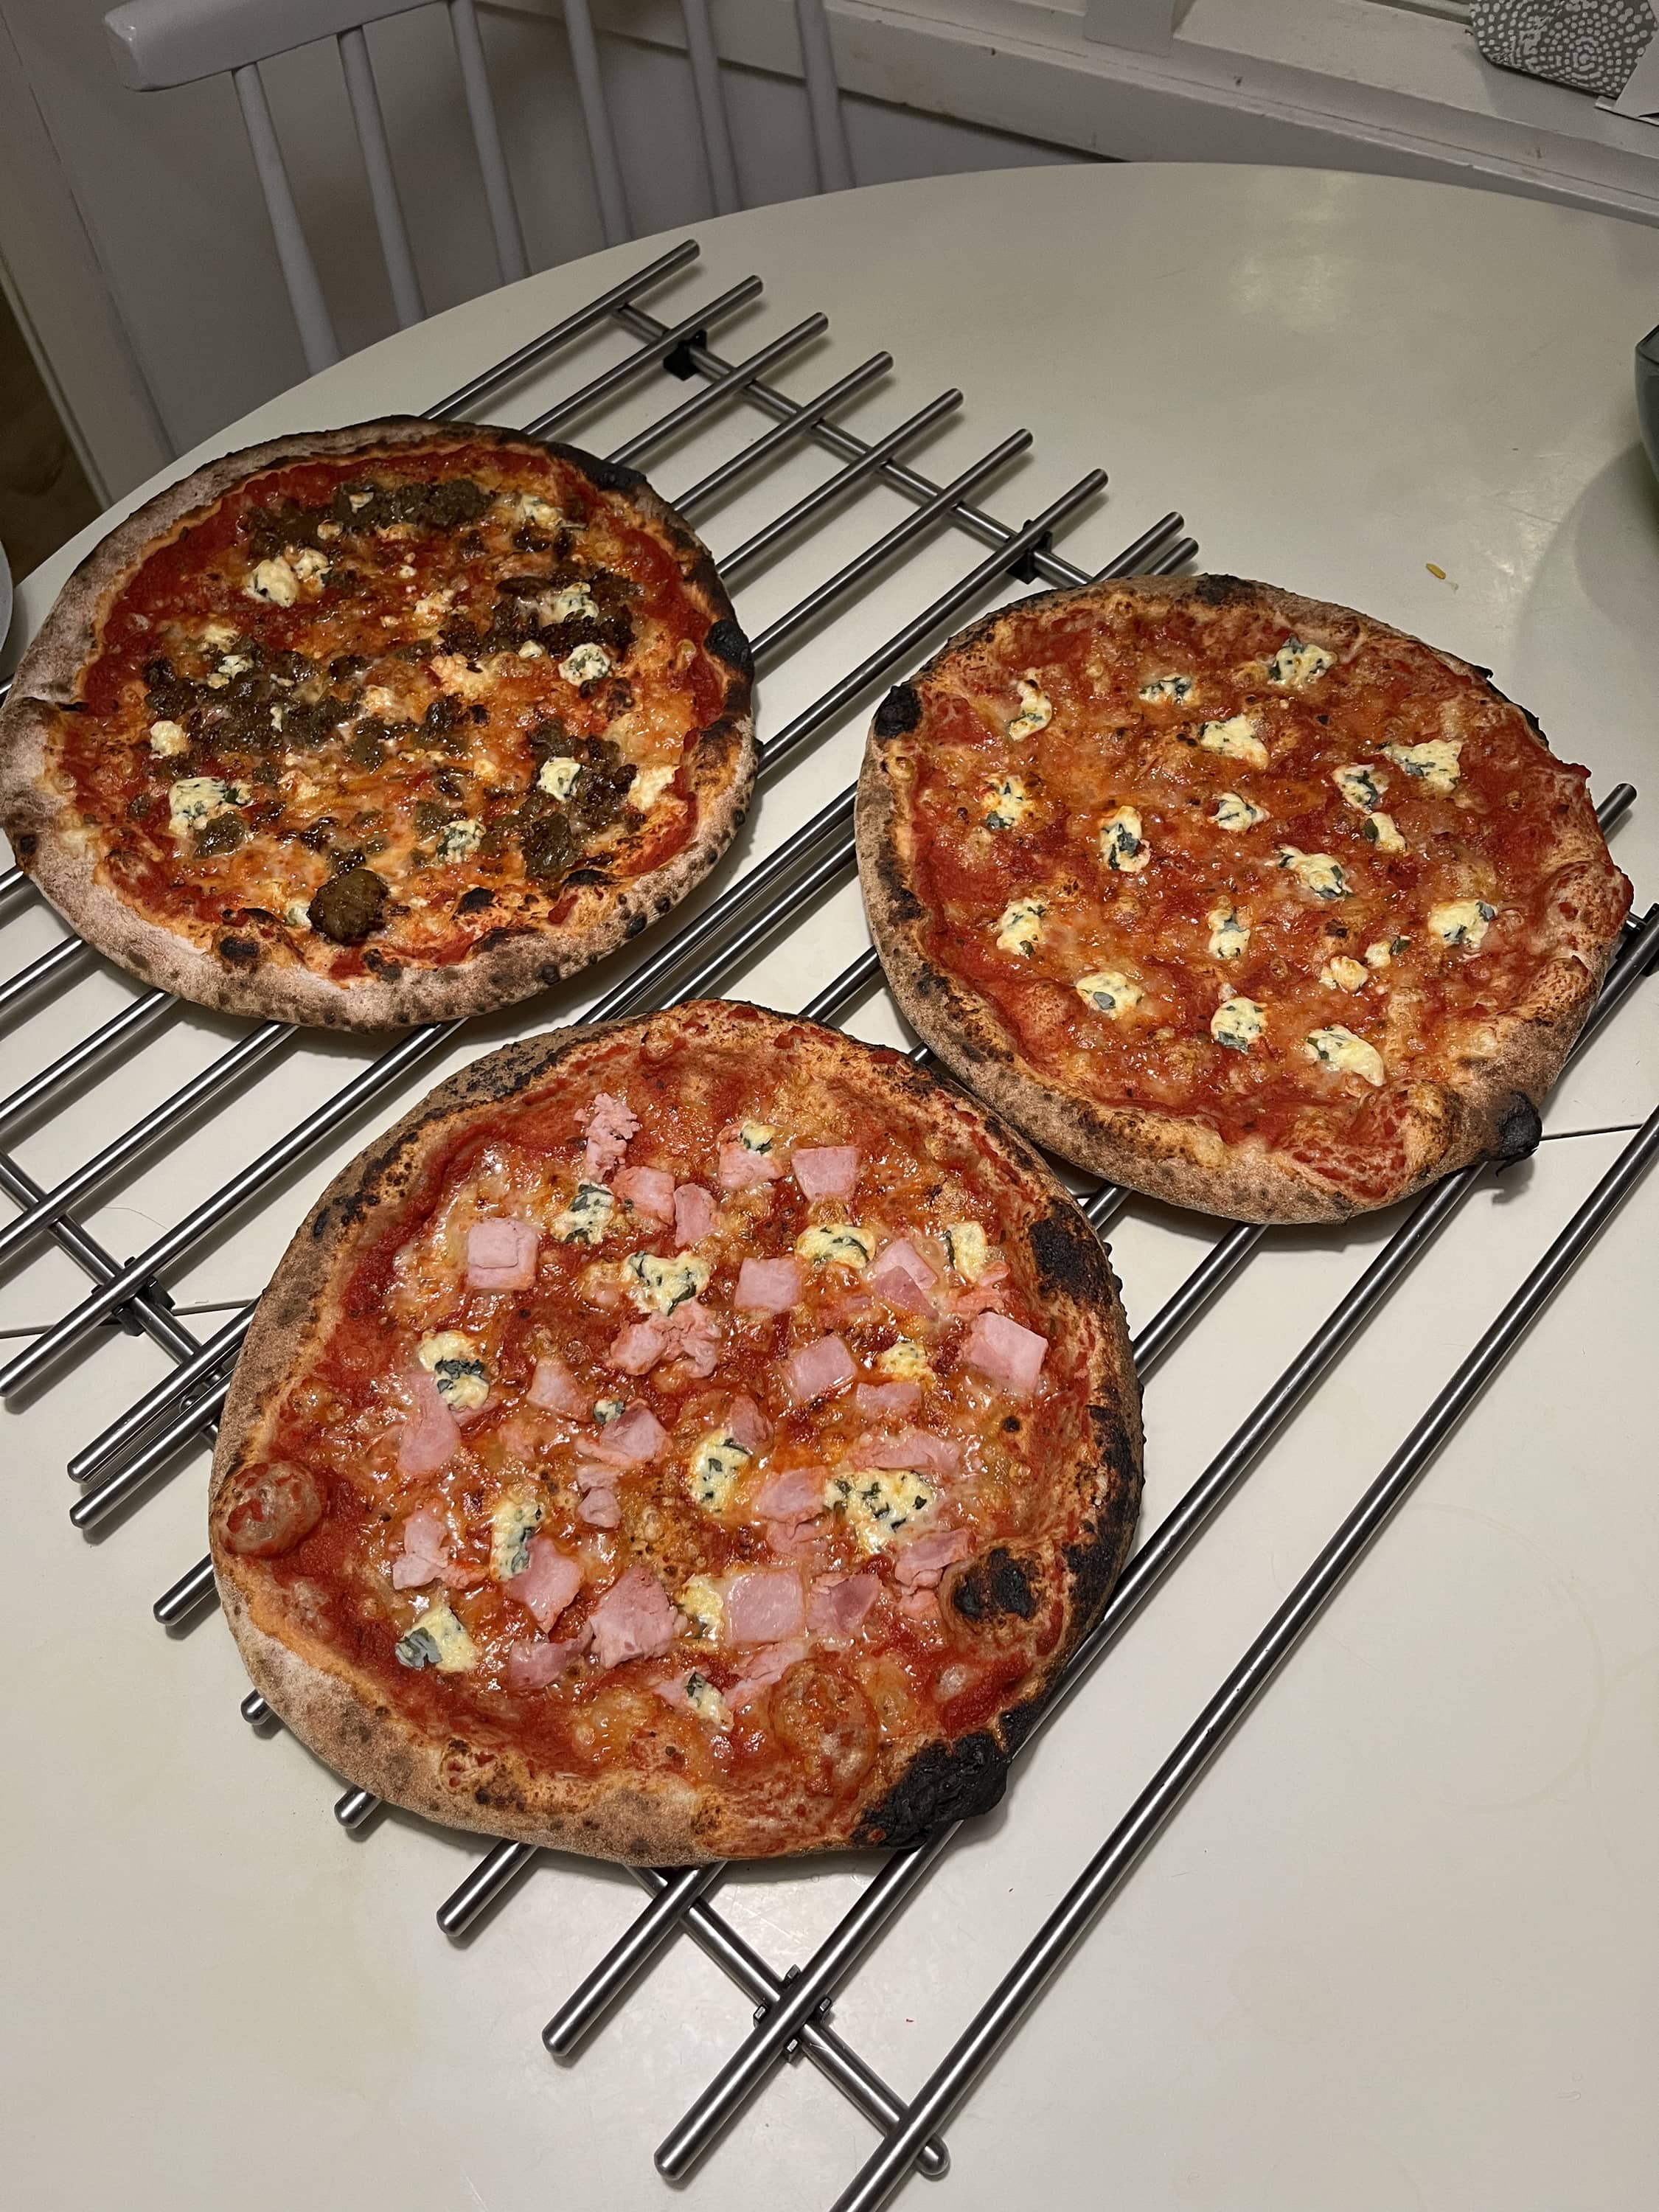 Three pizzas, done